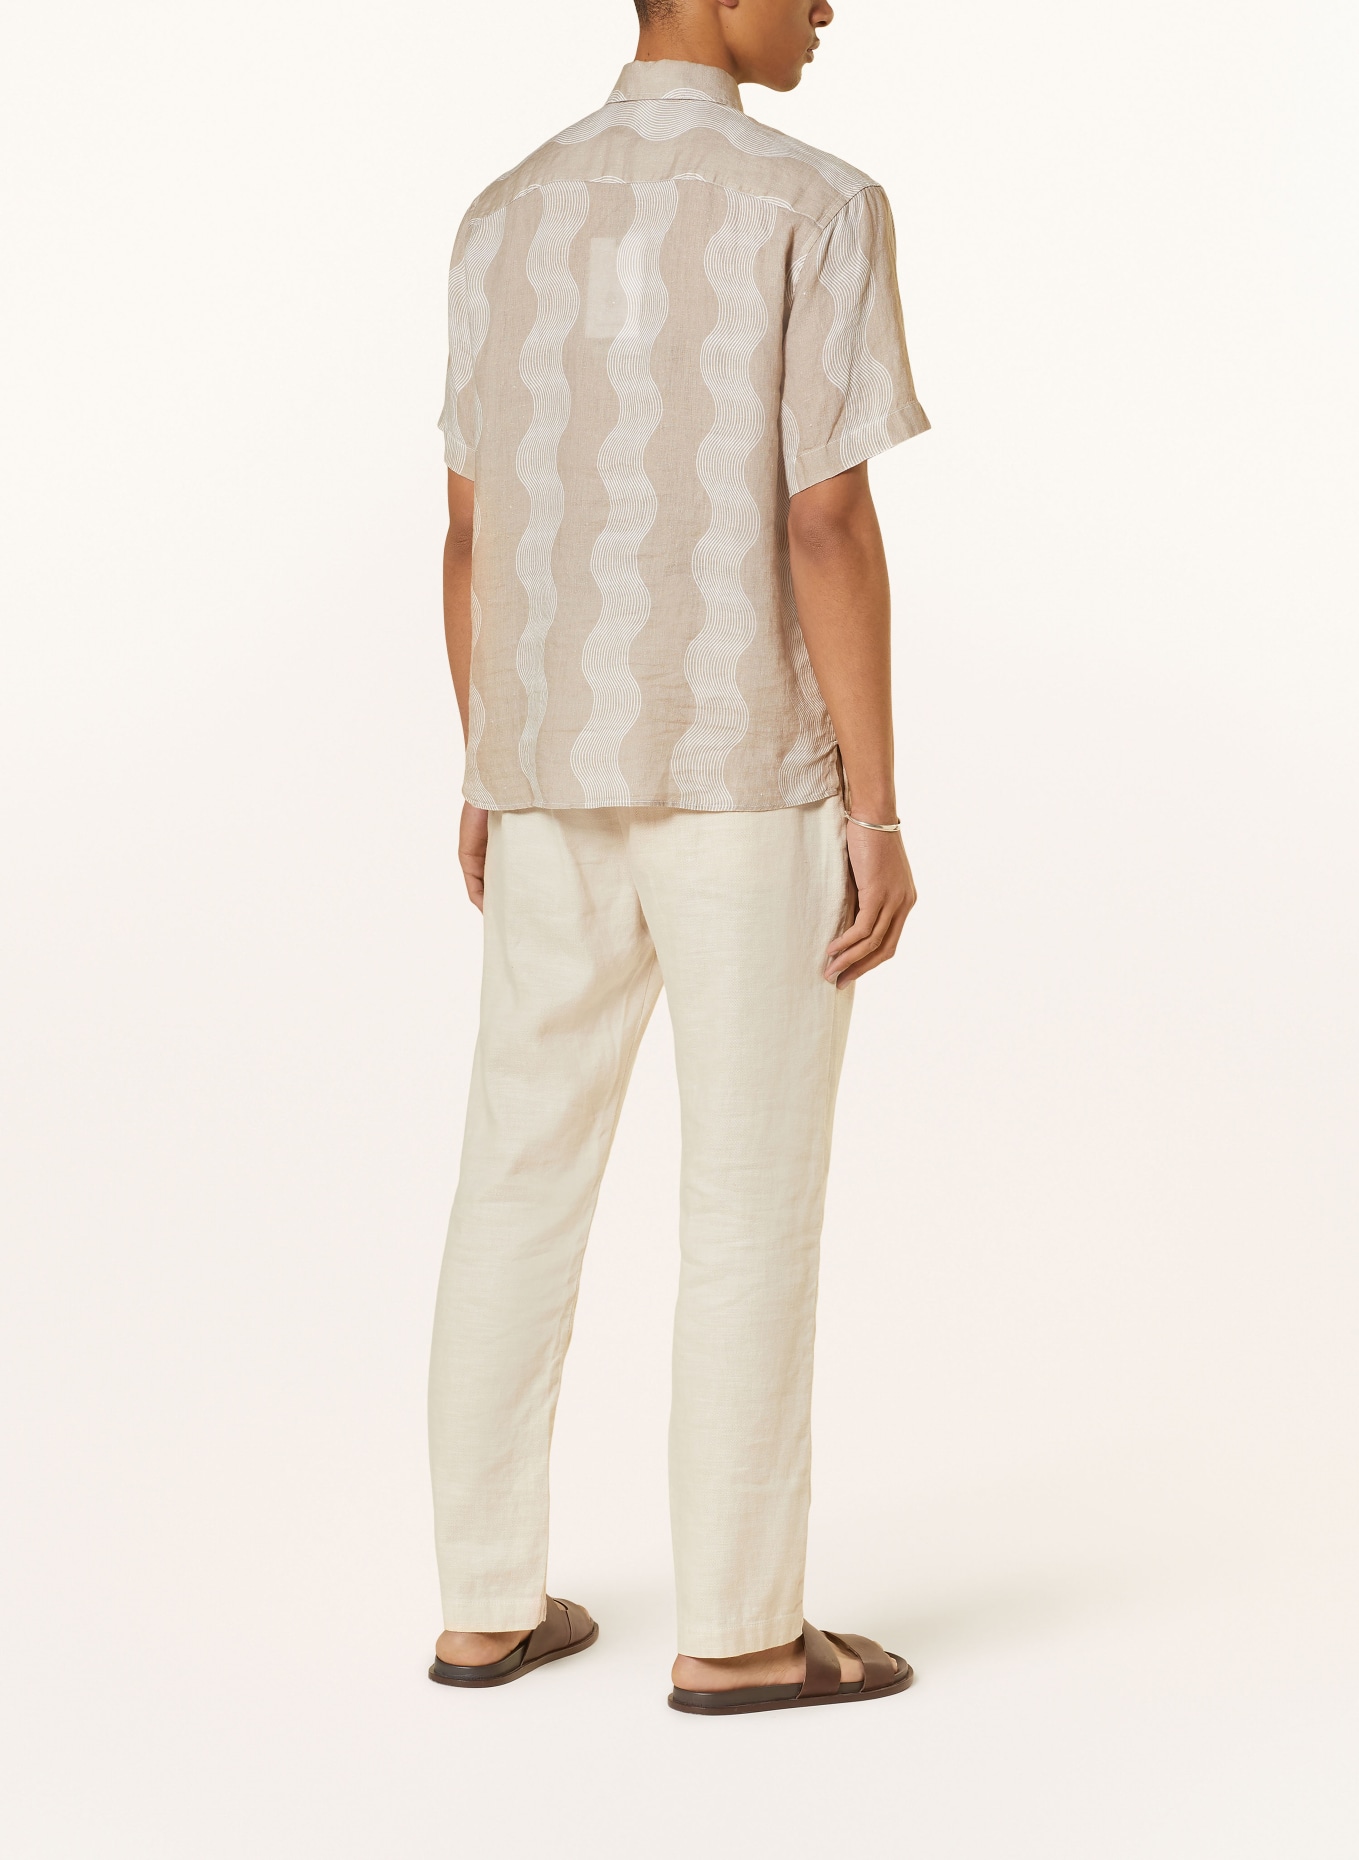 FRESCOBOL CARIOCA Kurzarm-Hemd CASTRO CABANA Comfort Fit aus Leinen, Farbe: 759 Truffle (Bild 3)